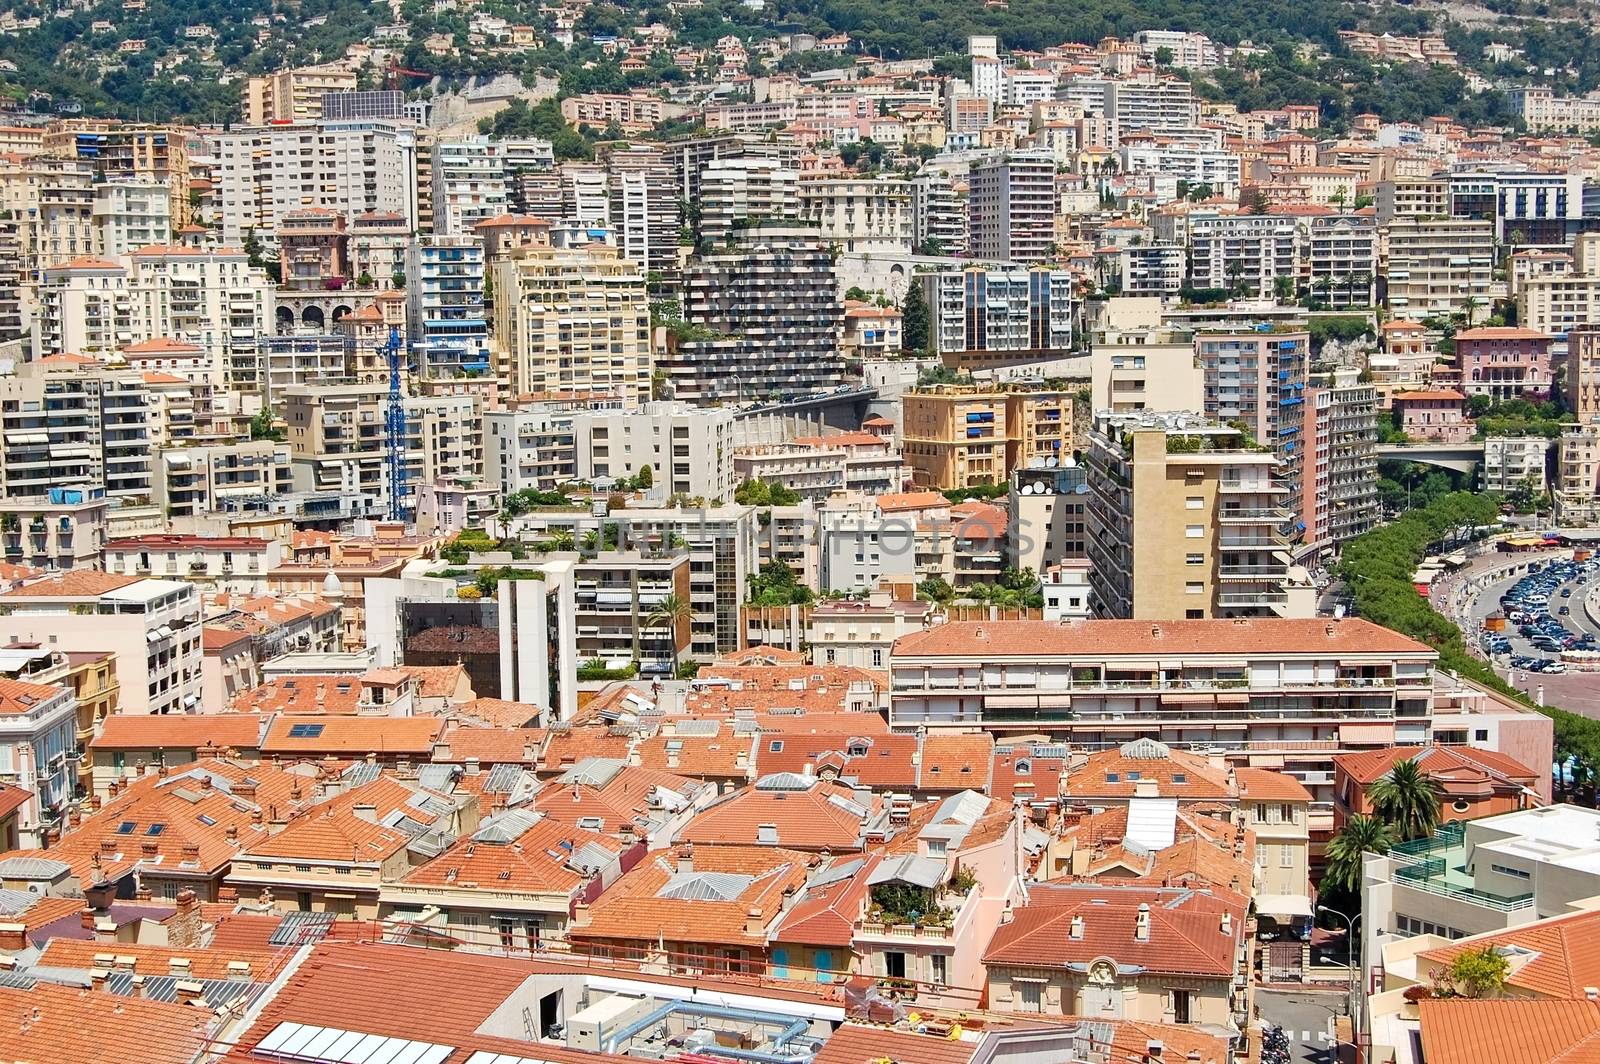 Monaco area view by Venakr